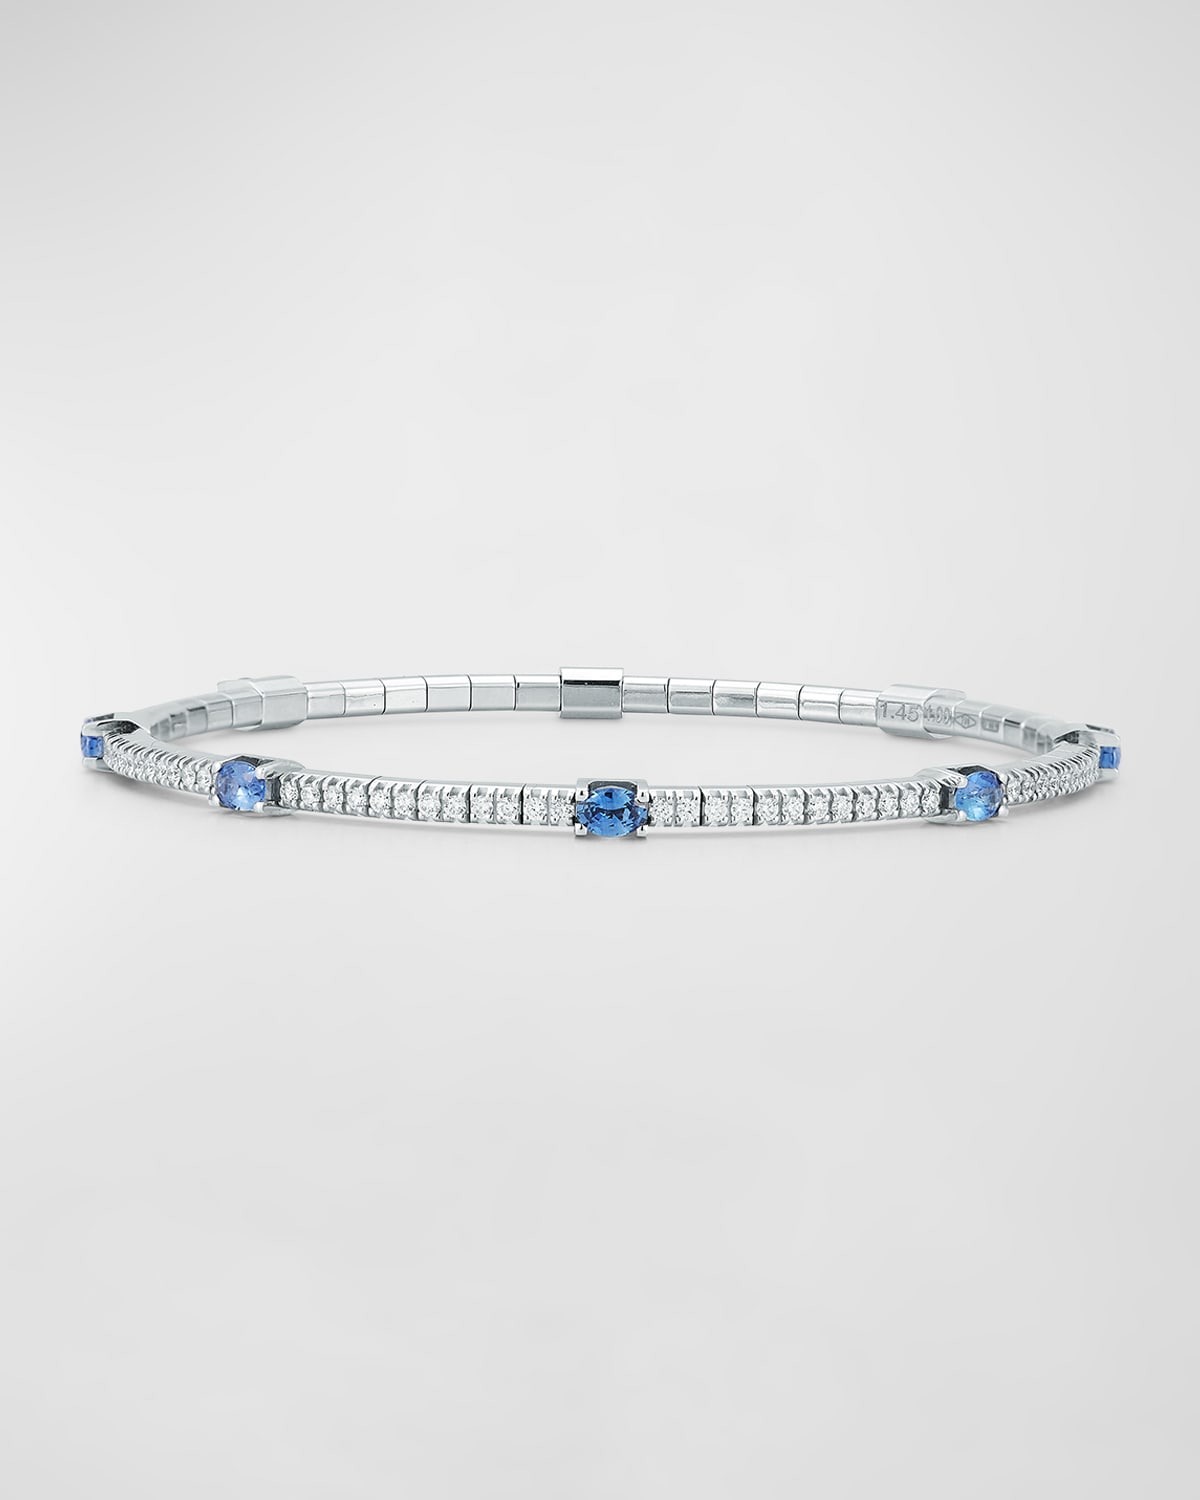 18K White Gold Oval Blue Sapphire and Diamond Stretch Tennis Bracelet, Size 6.5"L